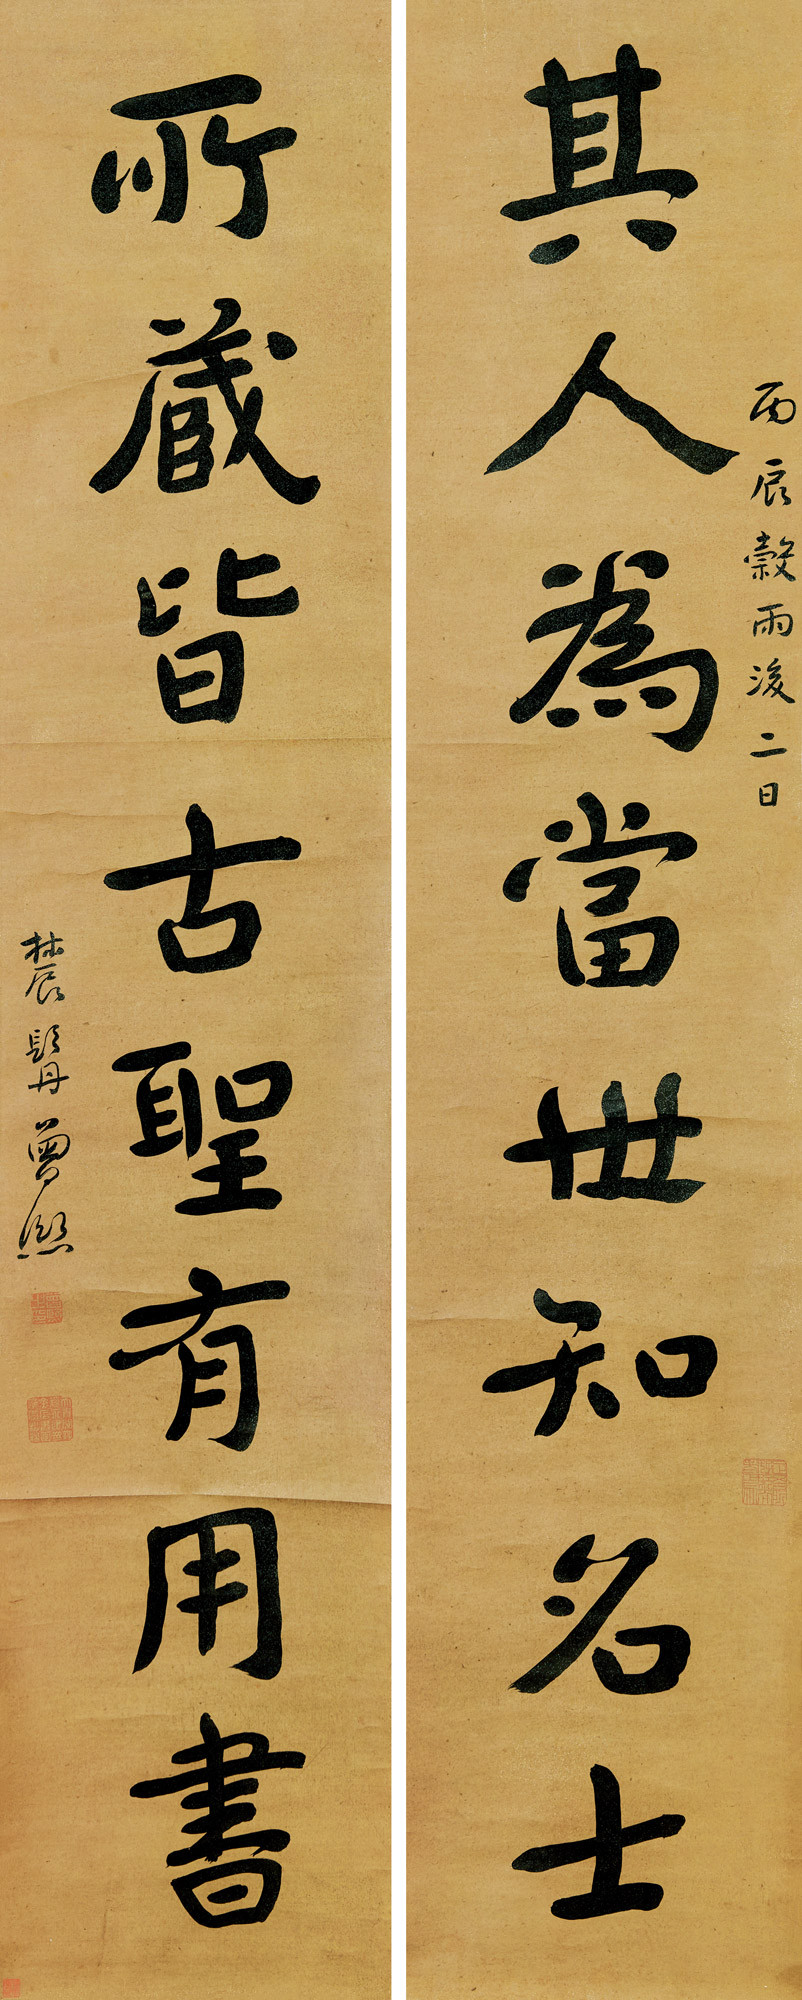 Eight - Characters Calligraphic Couplet in Regular Script